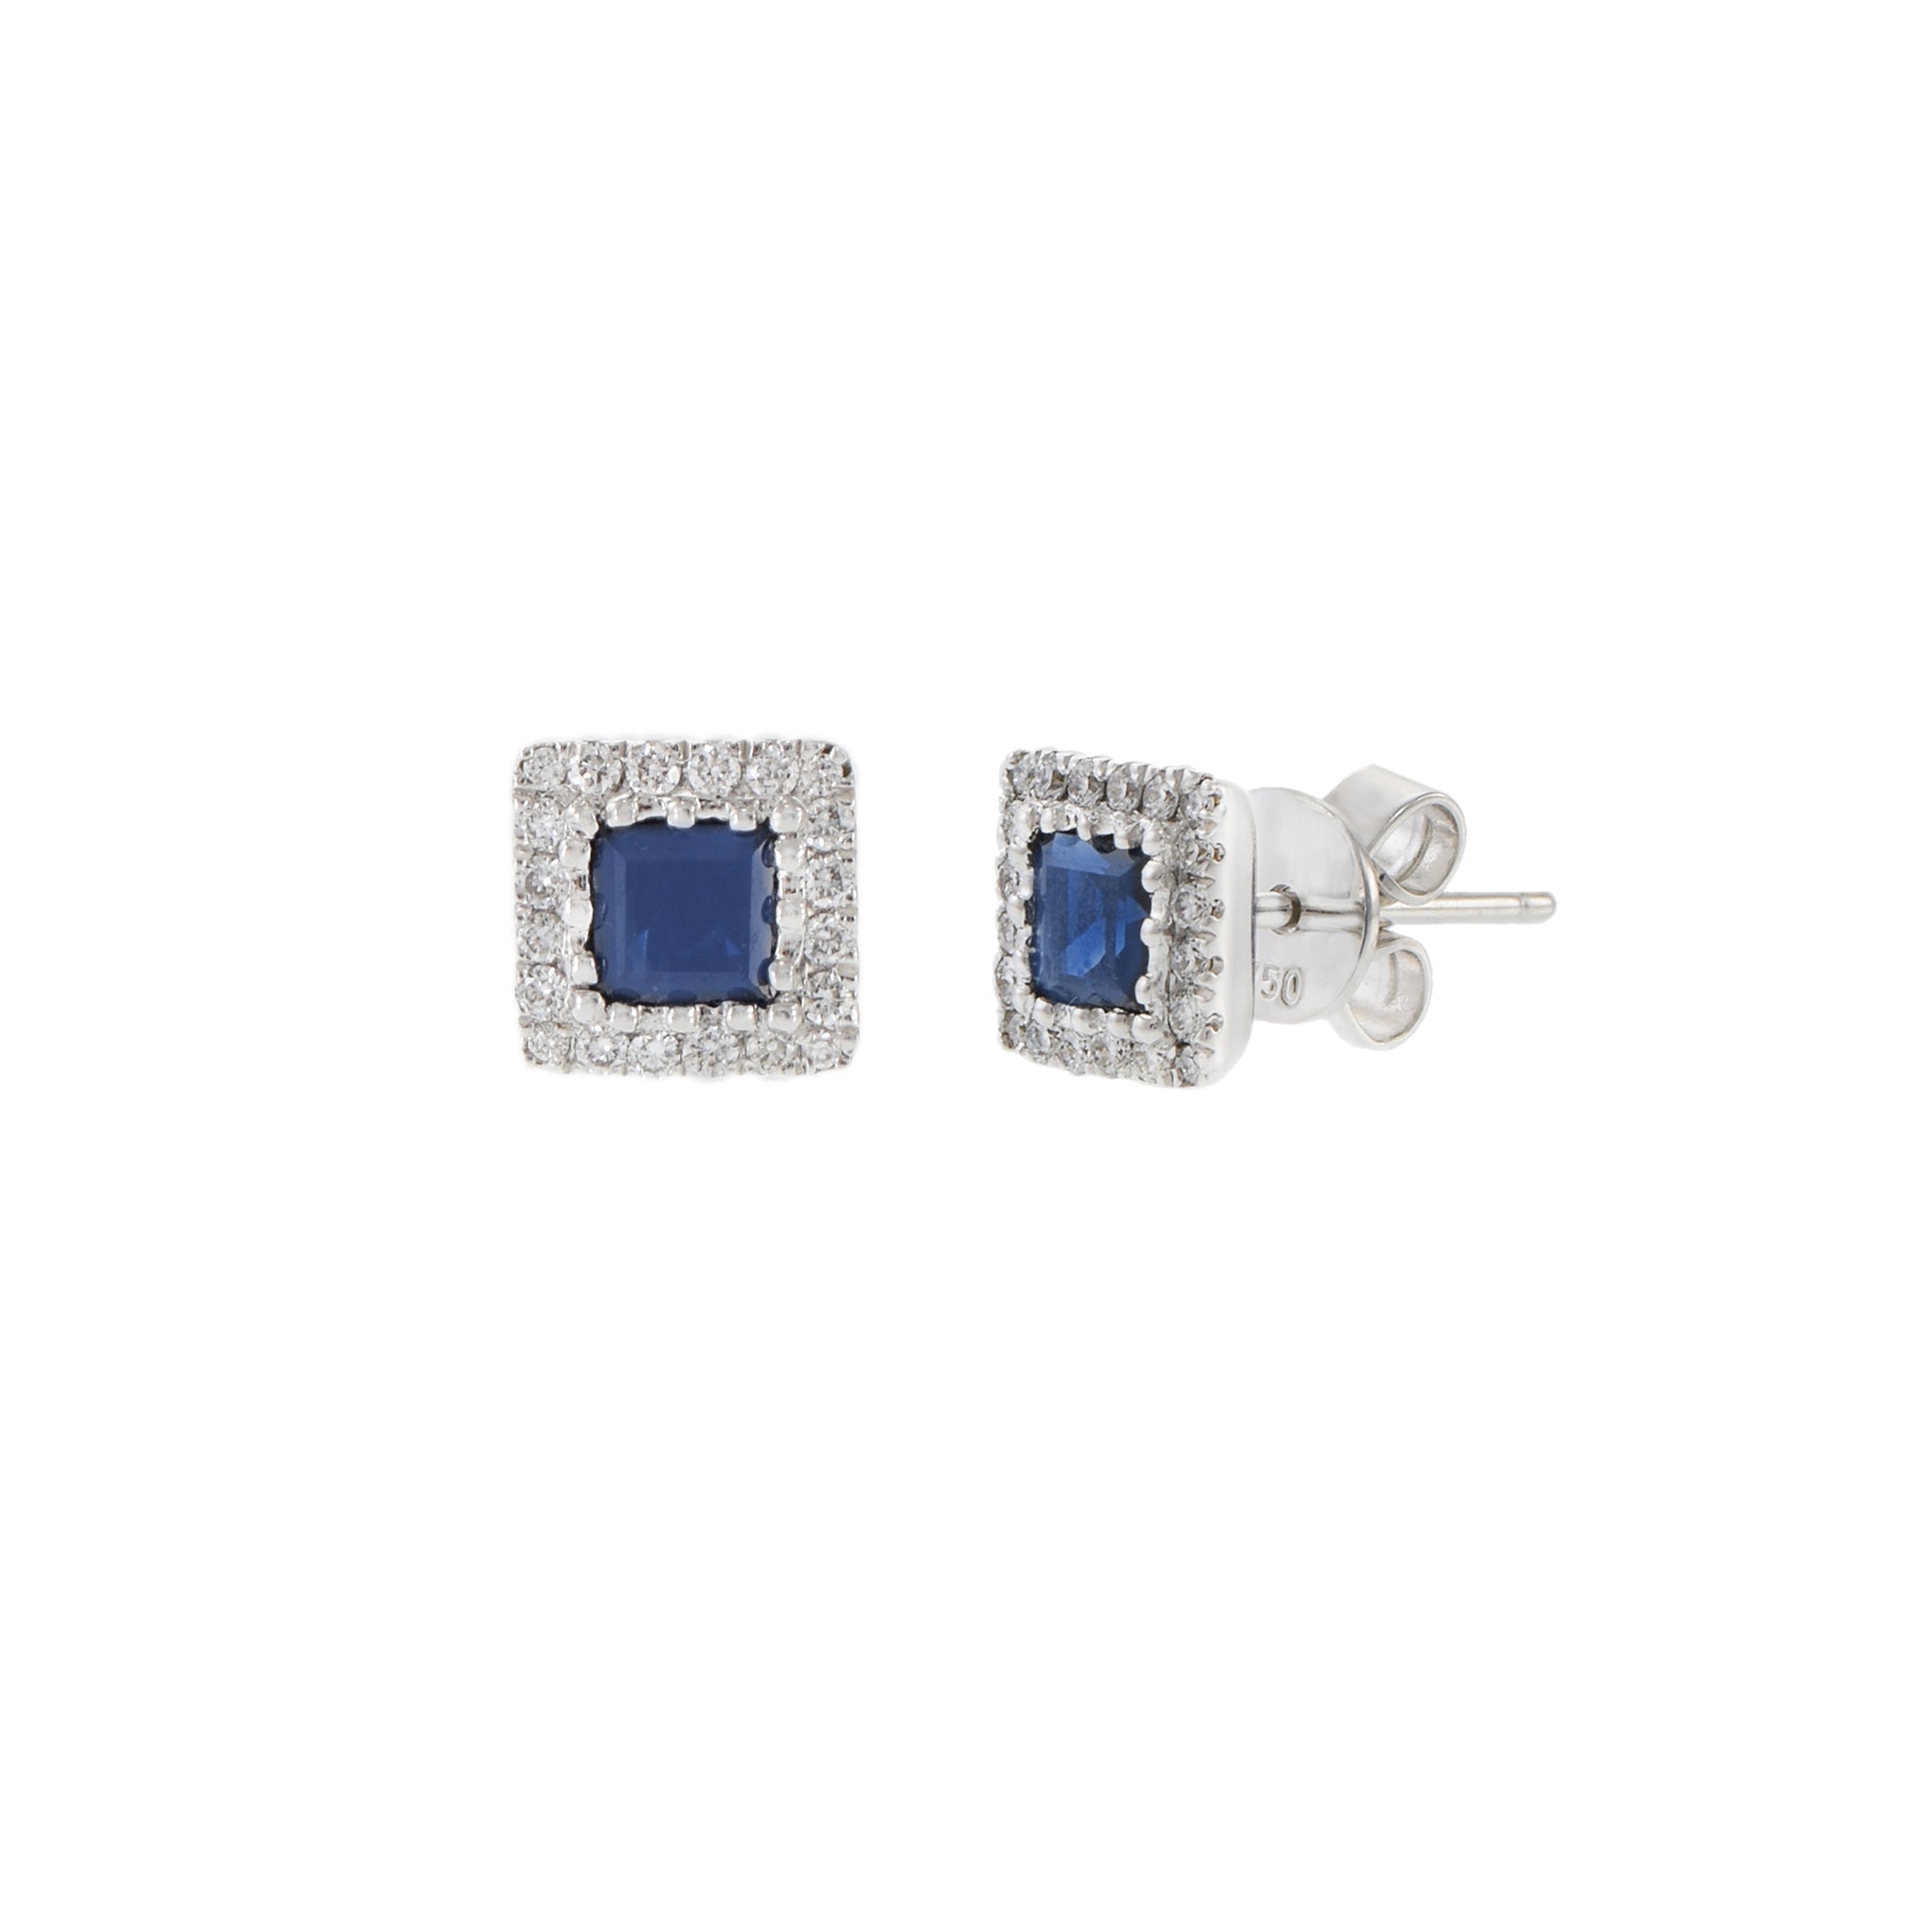 18KT White Gold Princess Cut Sapphire and Diamond Earrings